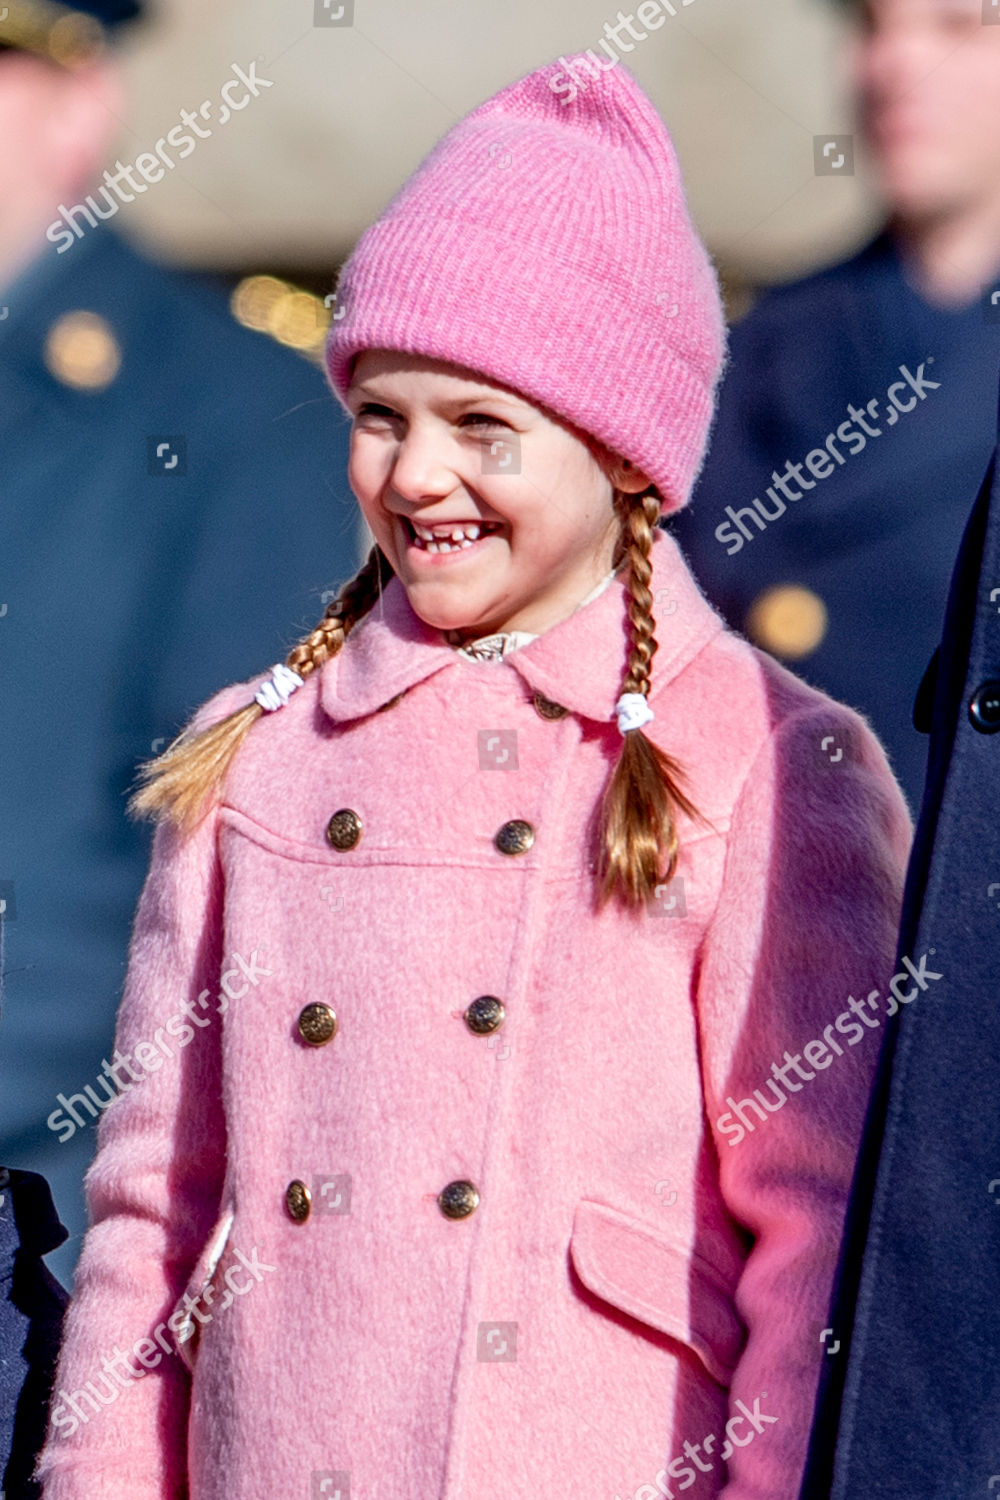 crown-princess-victoria-name-day-celebrations-stockholm-sweden-shutterstock-editorial-10151872ac.jpg